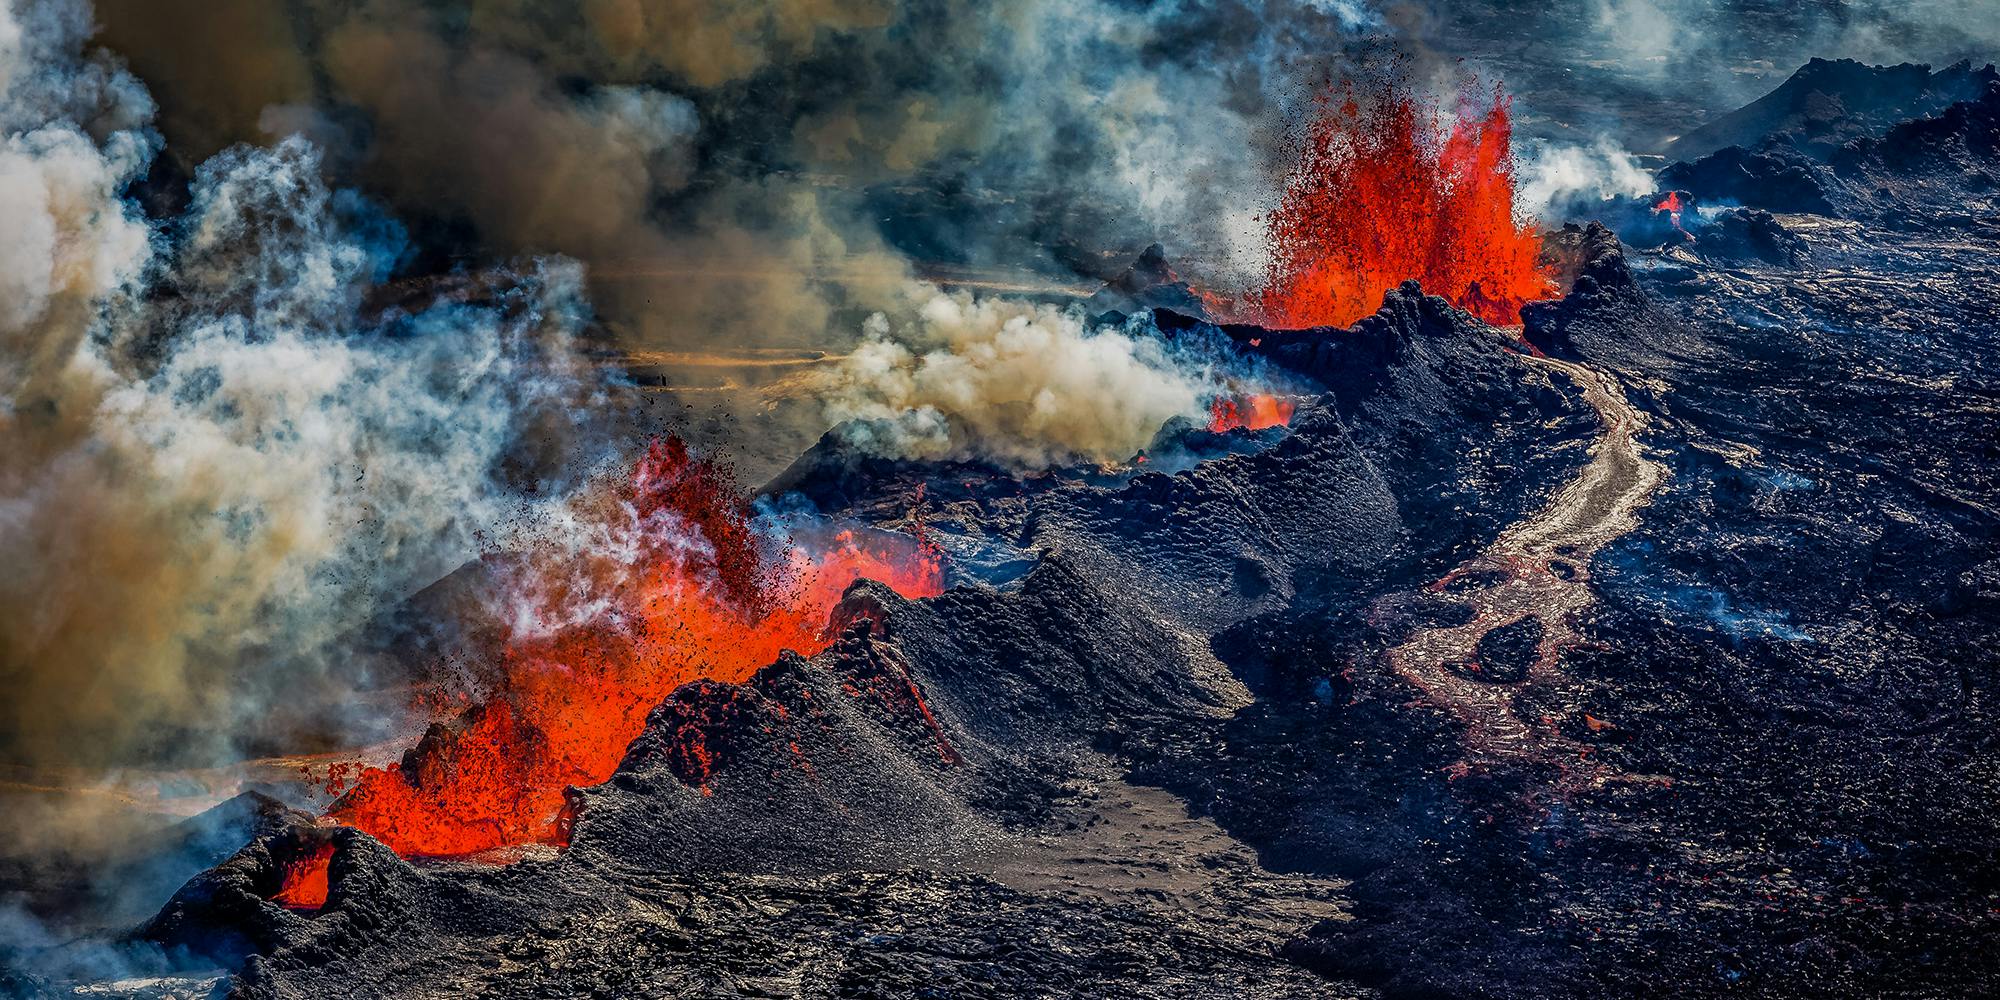 Holuhraun Volcano